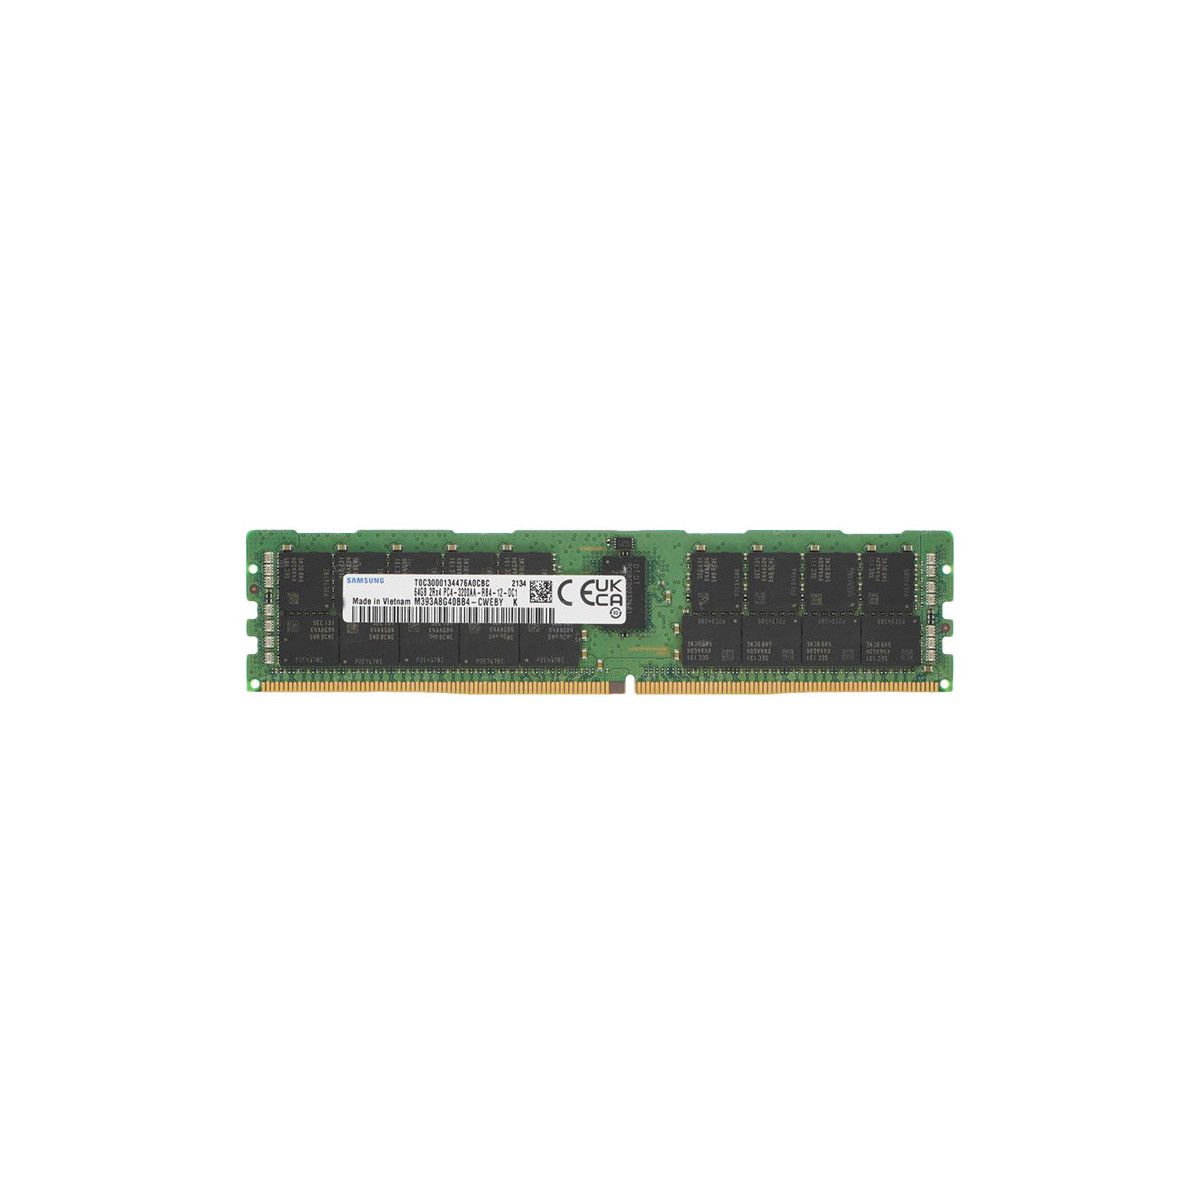 P07650-K21-MS - Memstar 1x 64GB DDR4-3200 RDIMM PC4-25600R - Mem-star Kompatibel OEM Speichermedien 1 - Memstar 